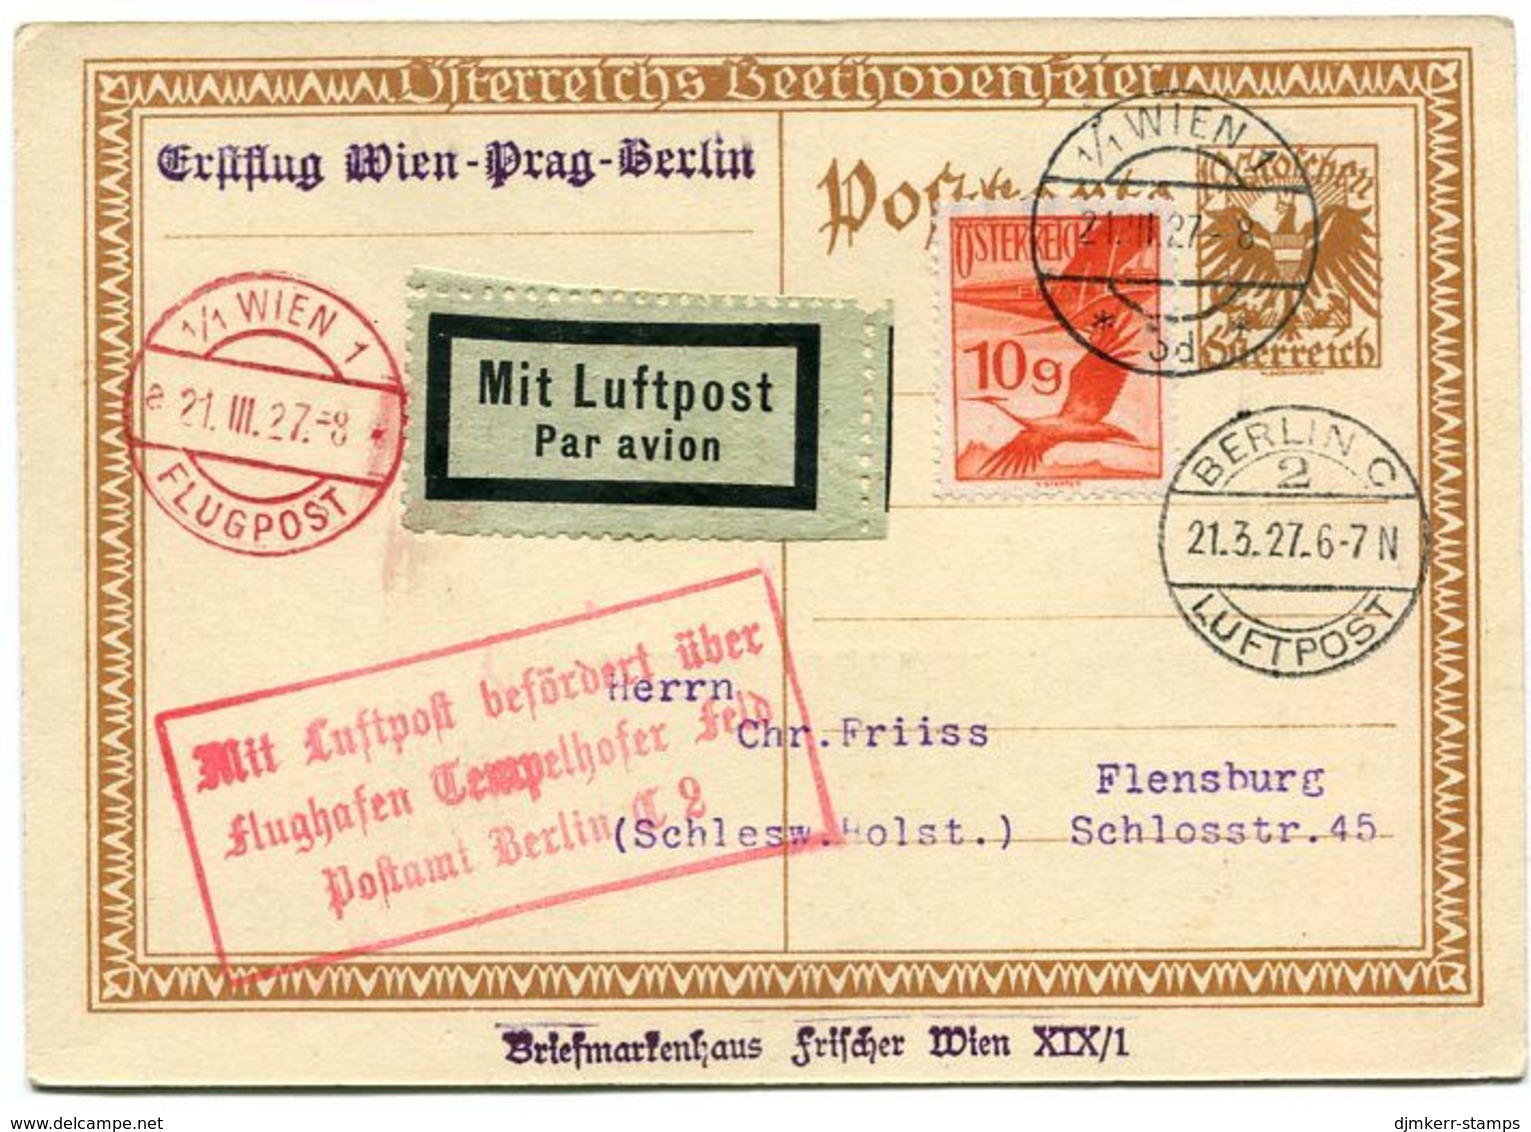 AUSTRIA 1927 First Flight Wien-Prague-Berlin On Postcard.  Beethoven Commemoration On Obverse. - Cartas & Documentos